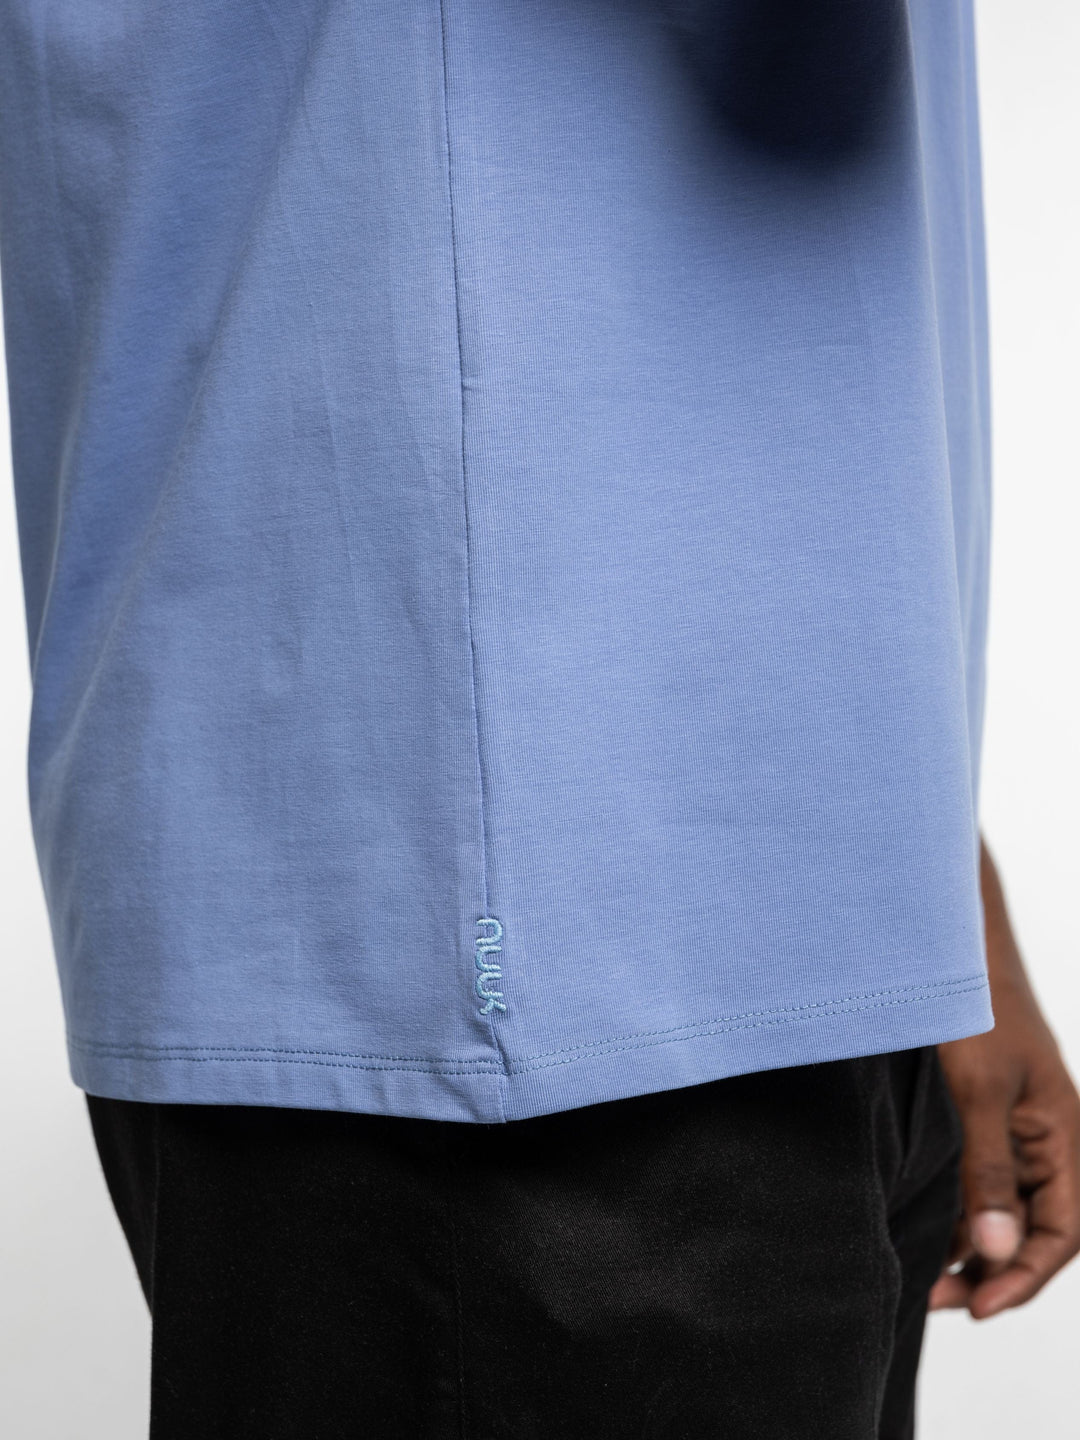 Zhivago x Nuuk Men T-shirt Slate Blue Straight Hem T-Shirt: SLS Comfort